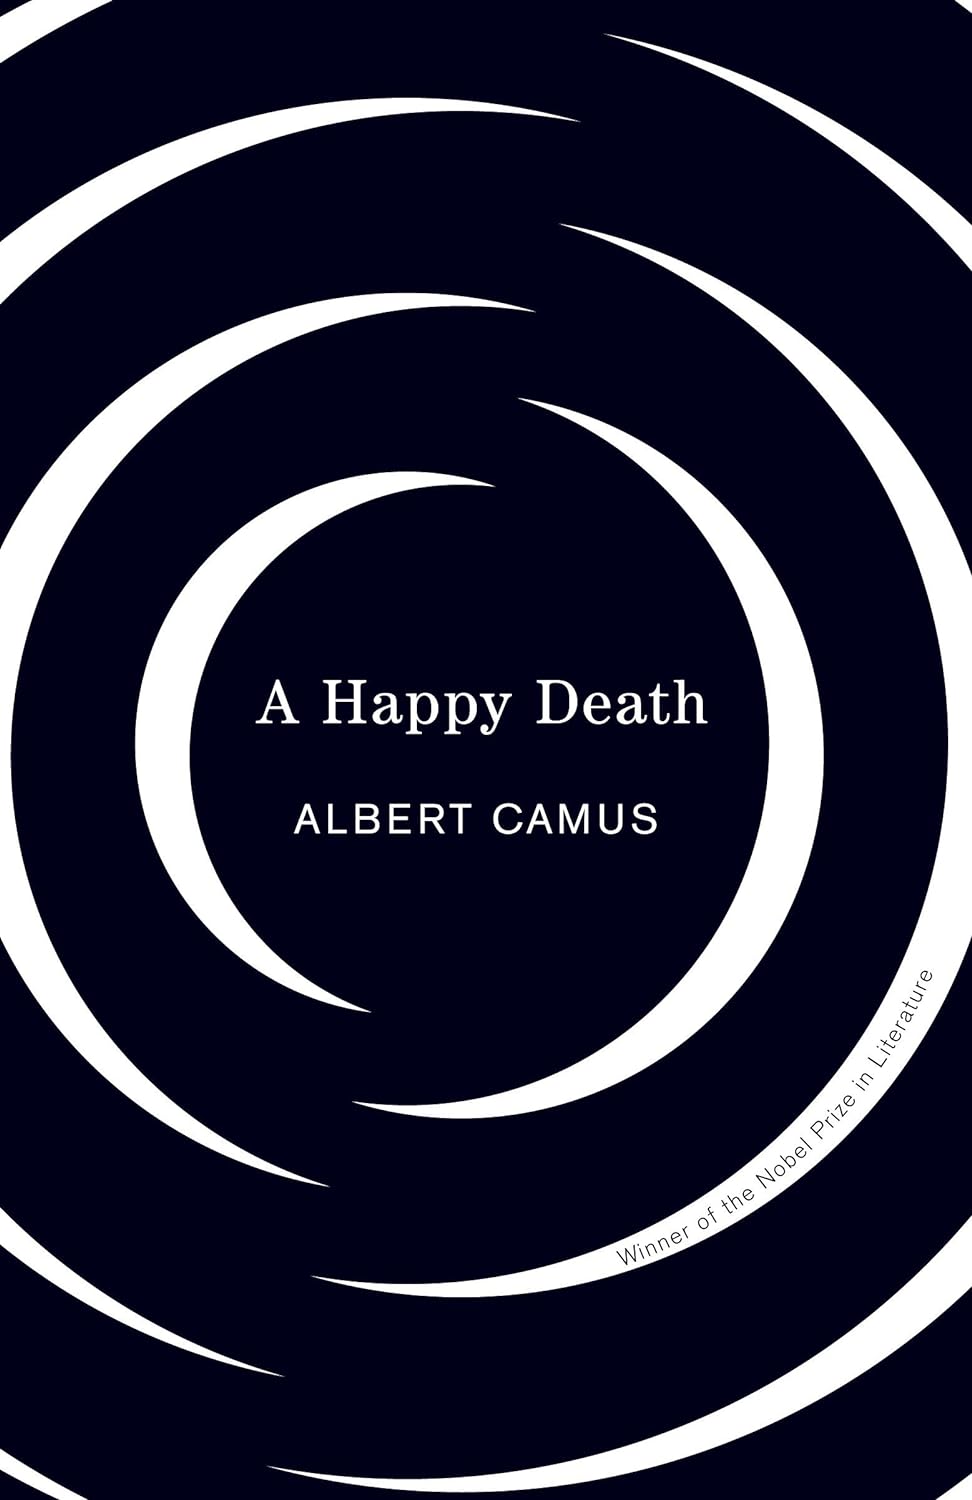 A Happy Death by Albert Camus